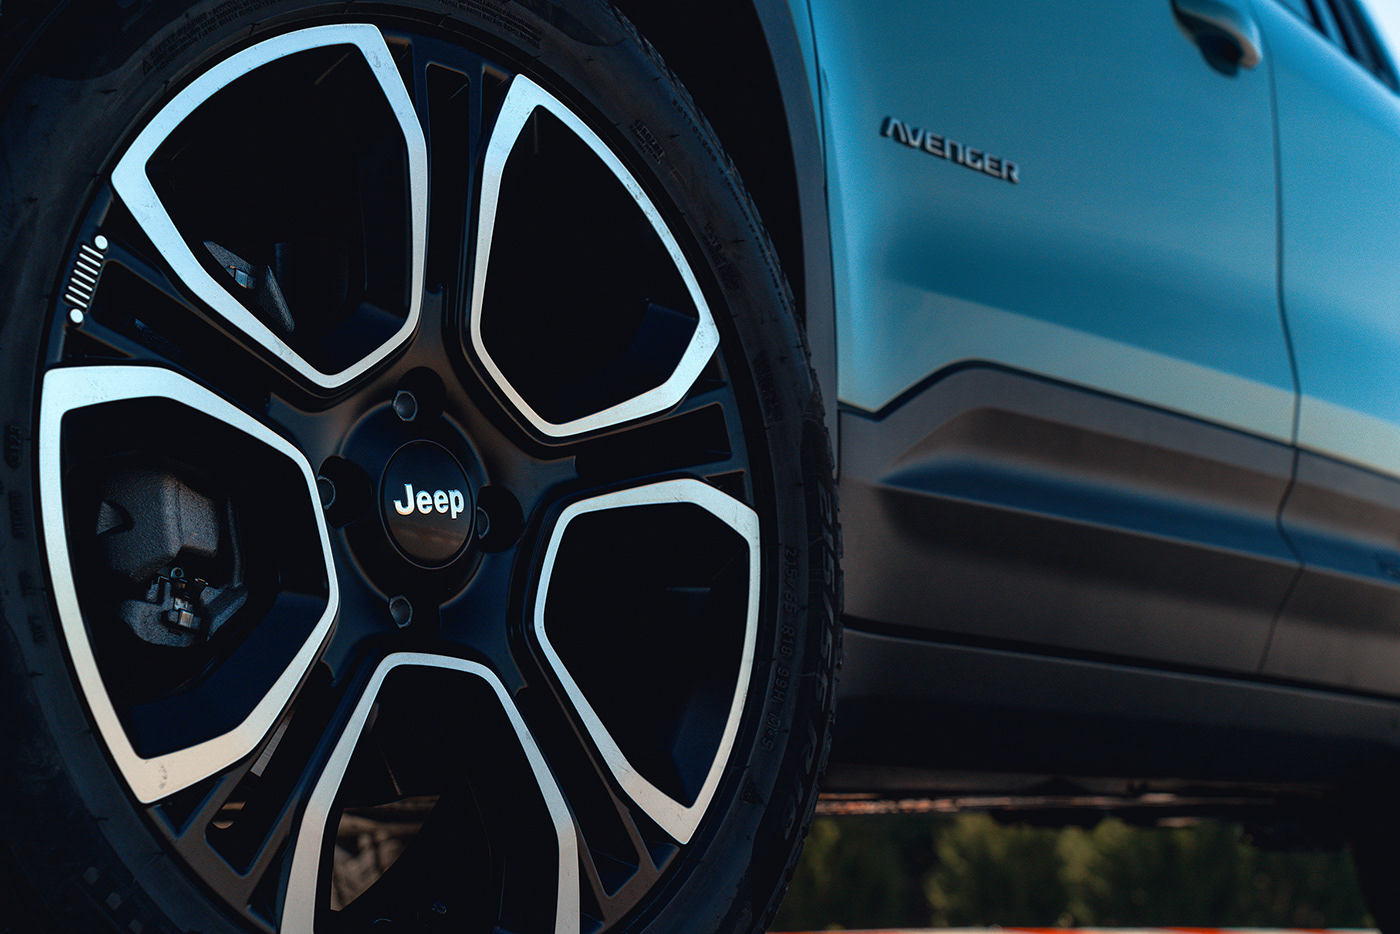 jeep jeep avenger car photography automotive   Social media post marketing   Advertising  car Vehicle automobile